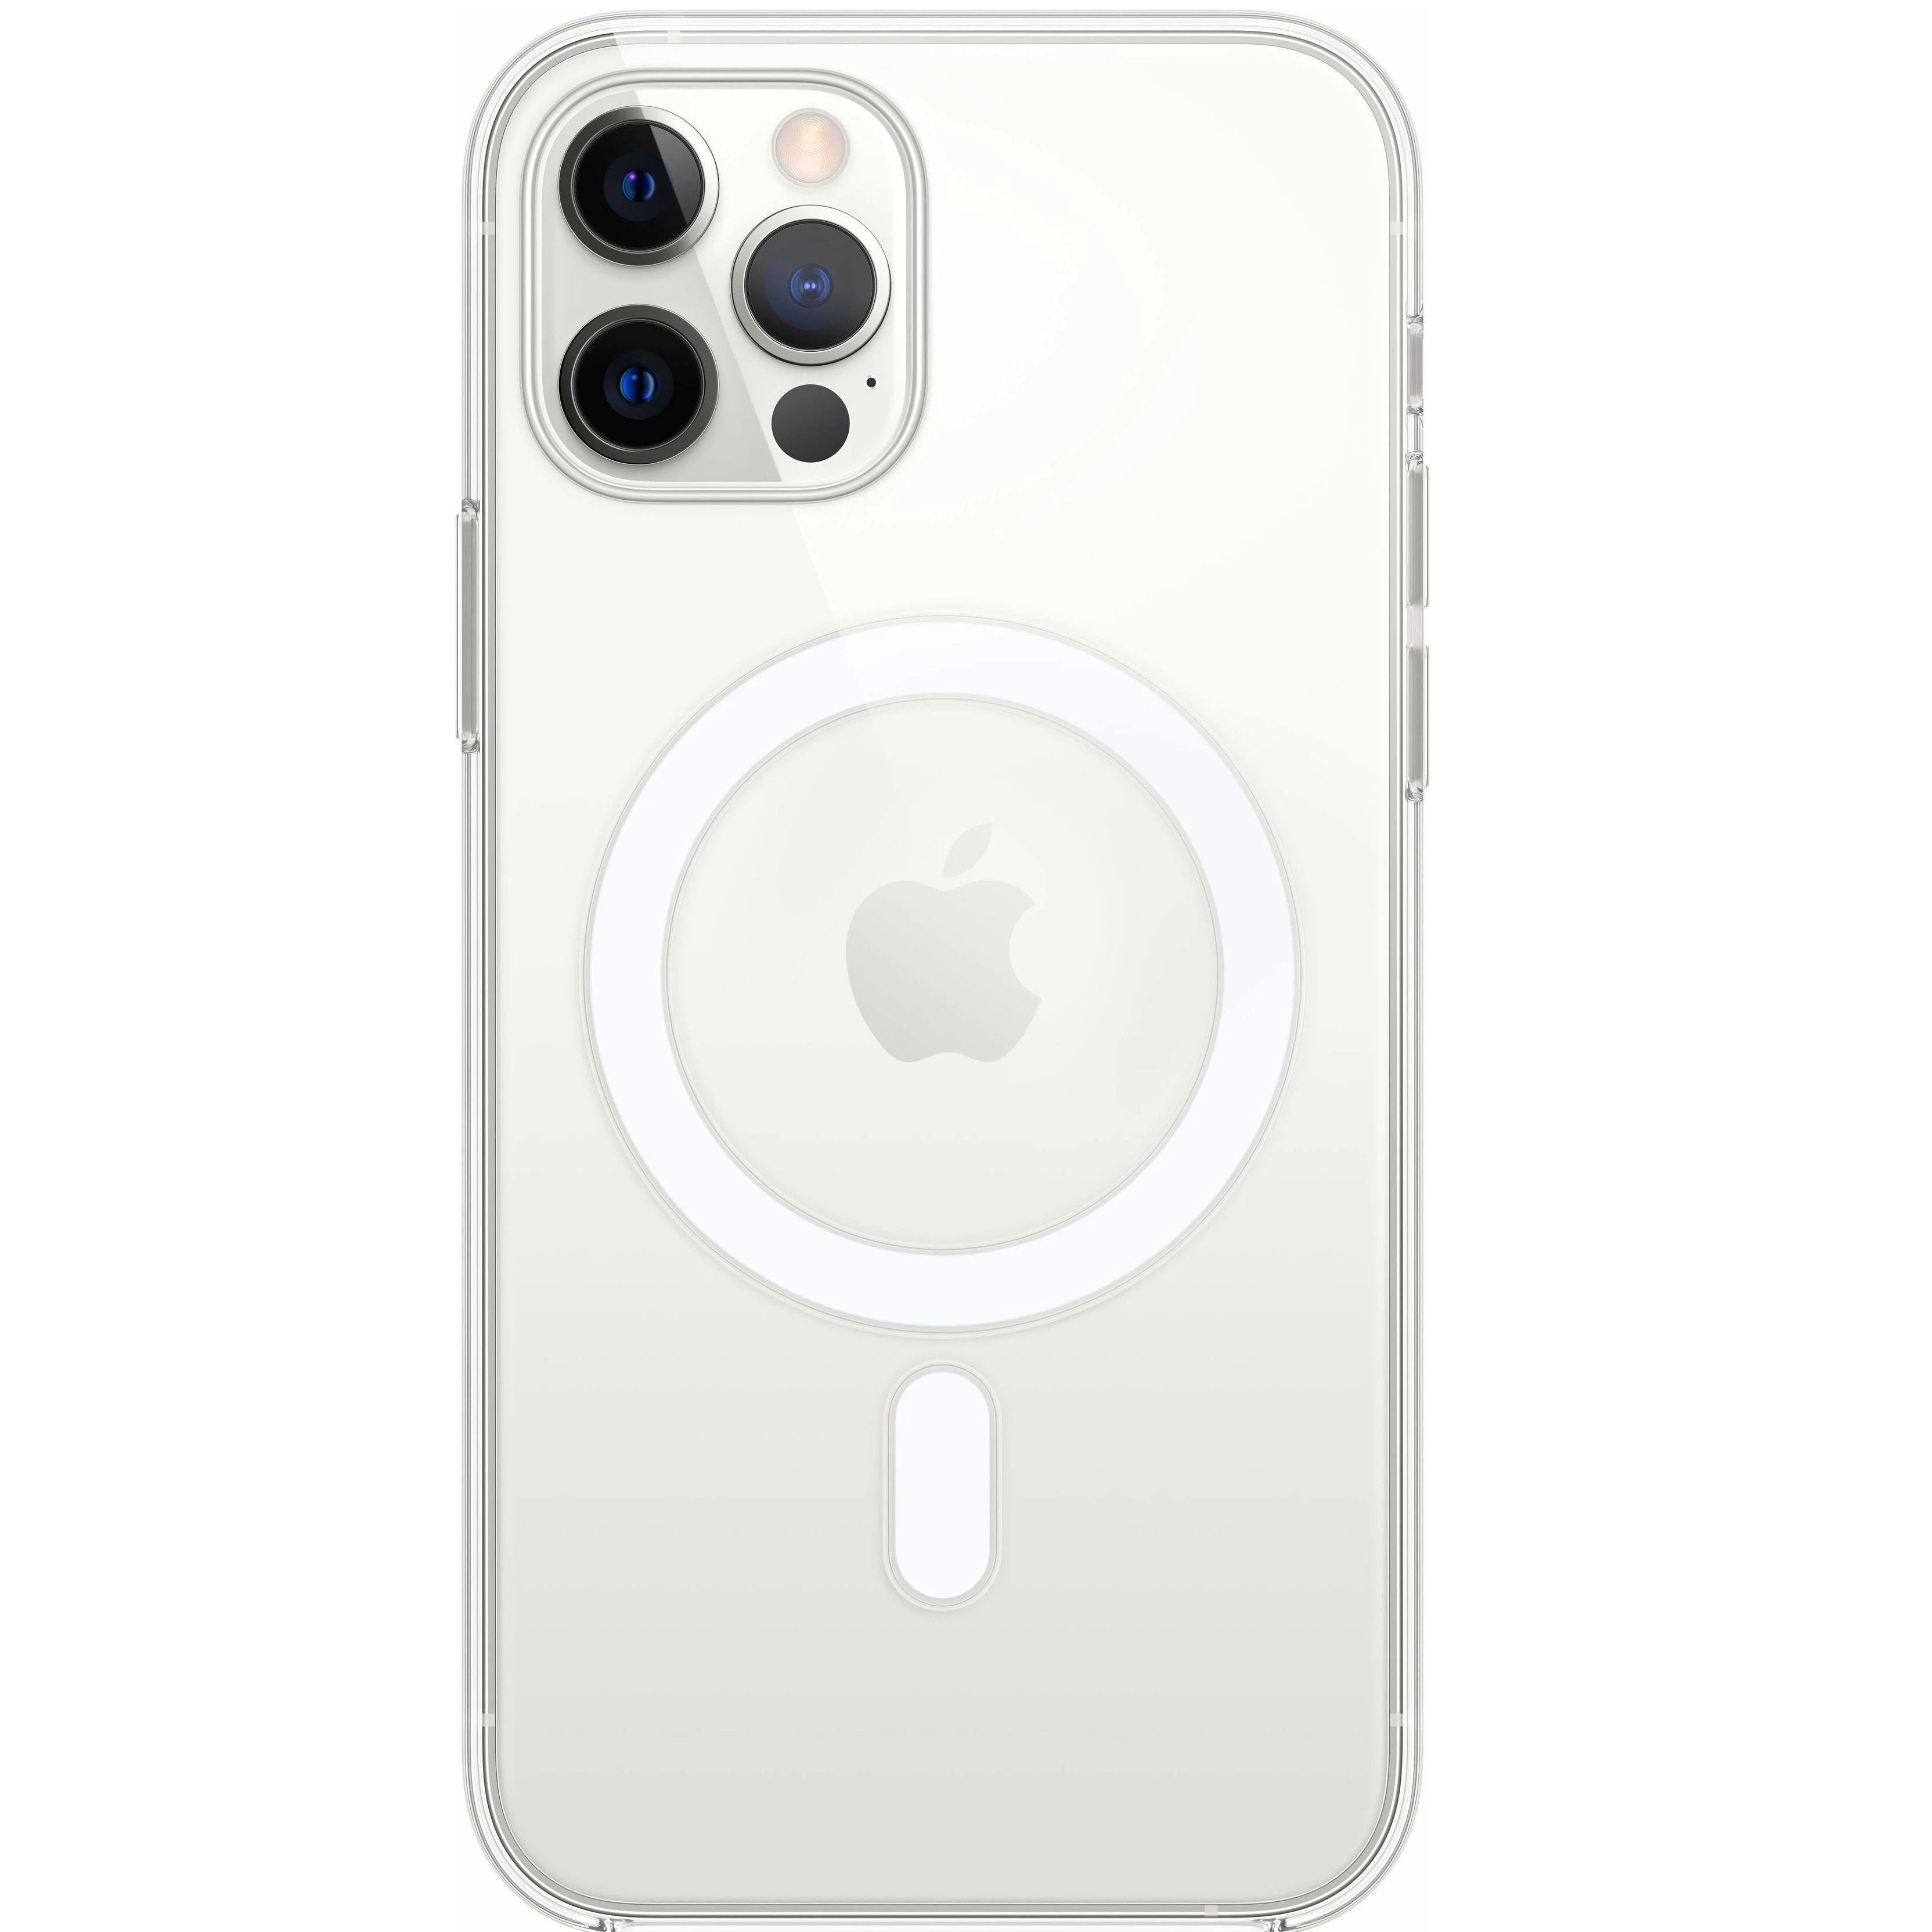 Iphone 12 pro герц. Iphone 11 64gb White. Iphone 11 Pro 64gb. Apple iphone 11 Pro Max. Apple iphone 11 Pro 64gb Silver.